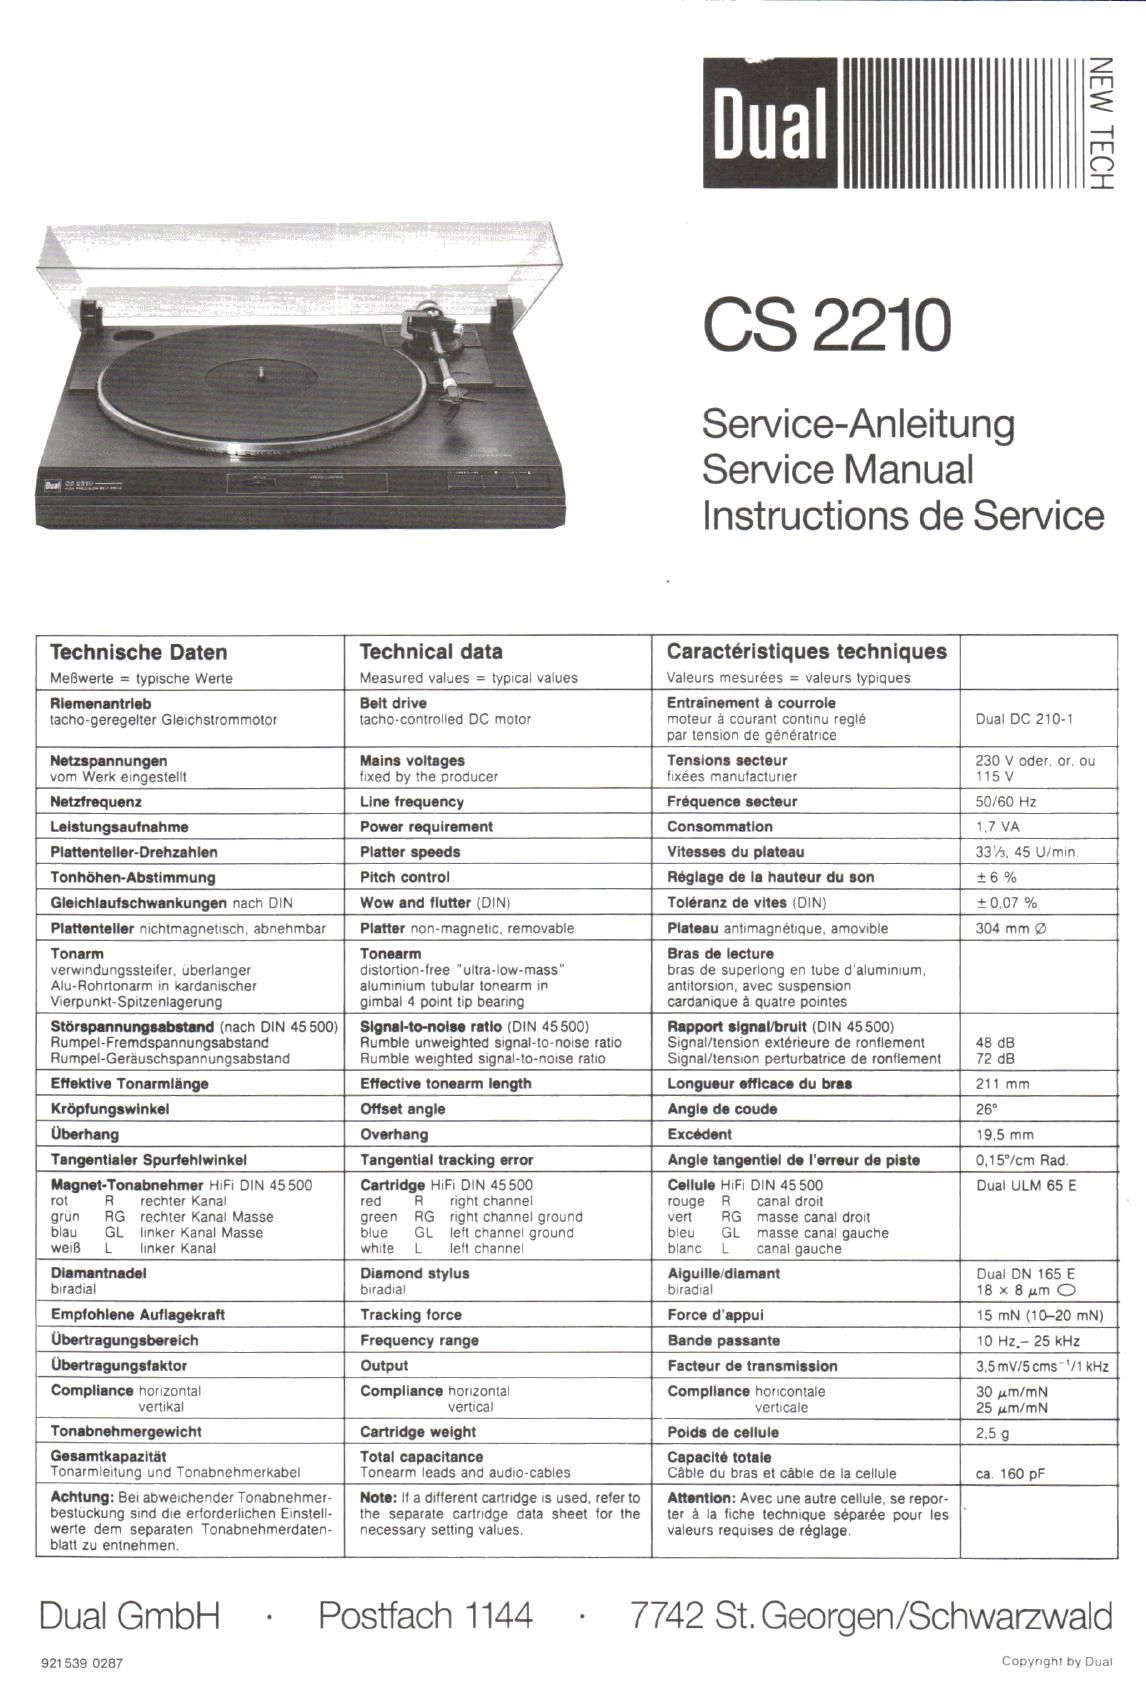 Dual CS 2210 Service Manual